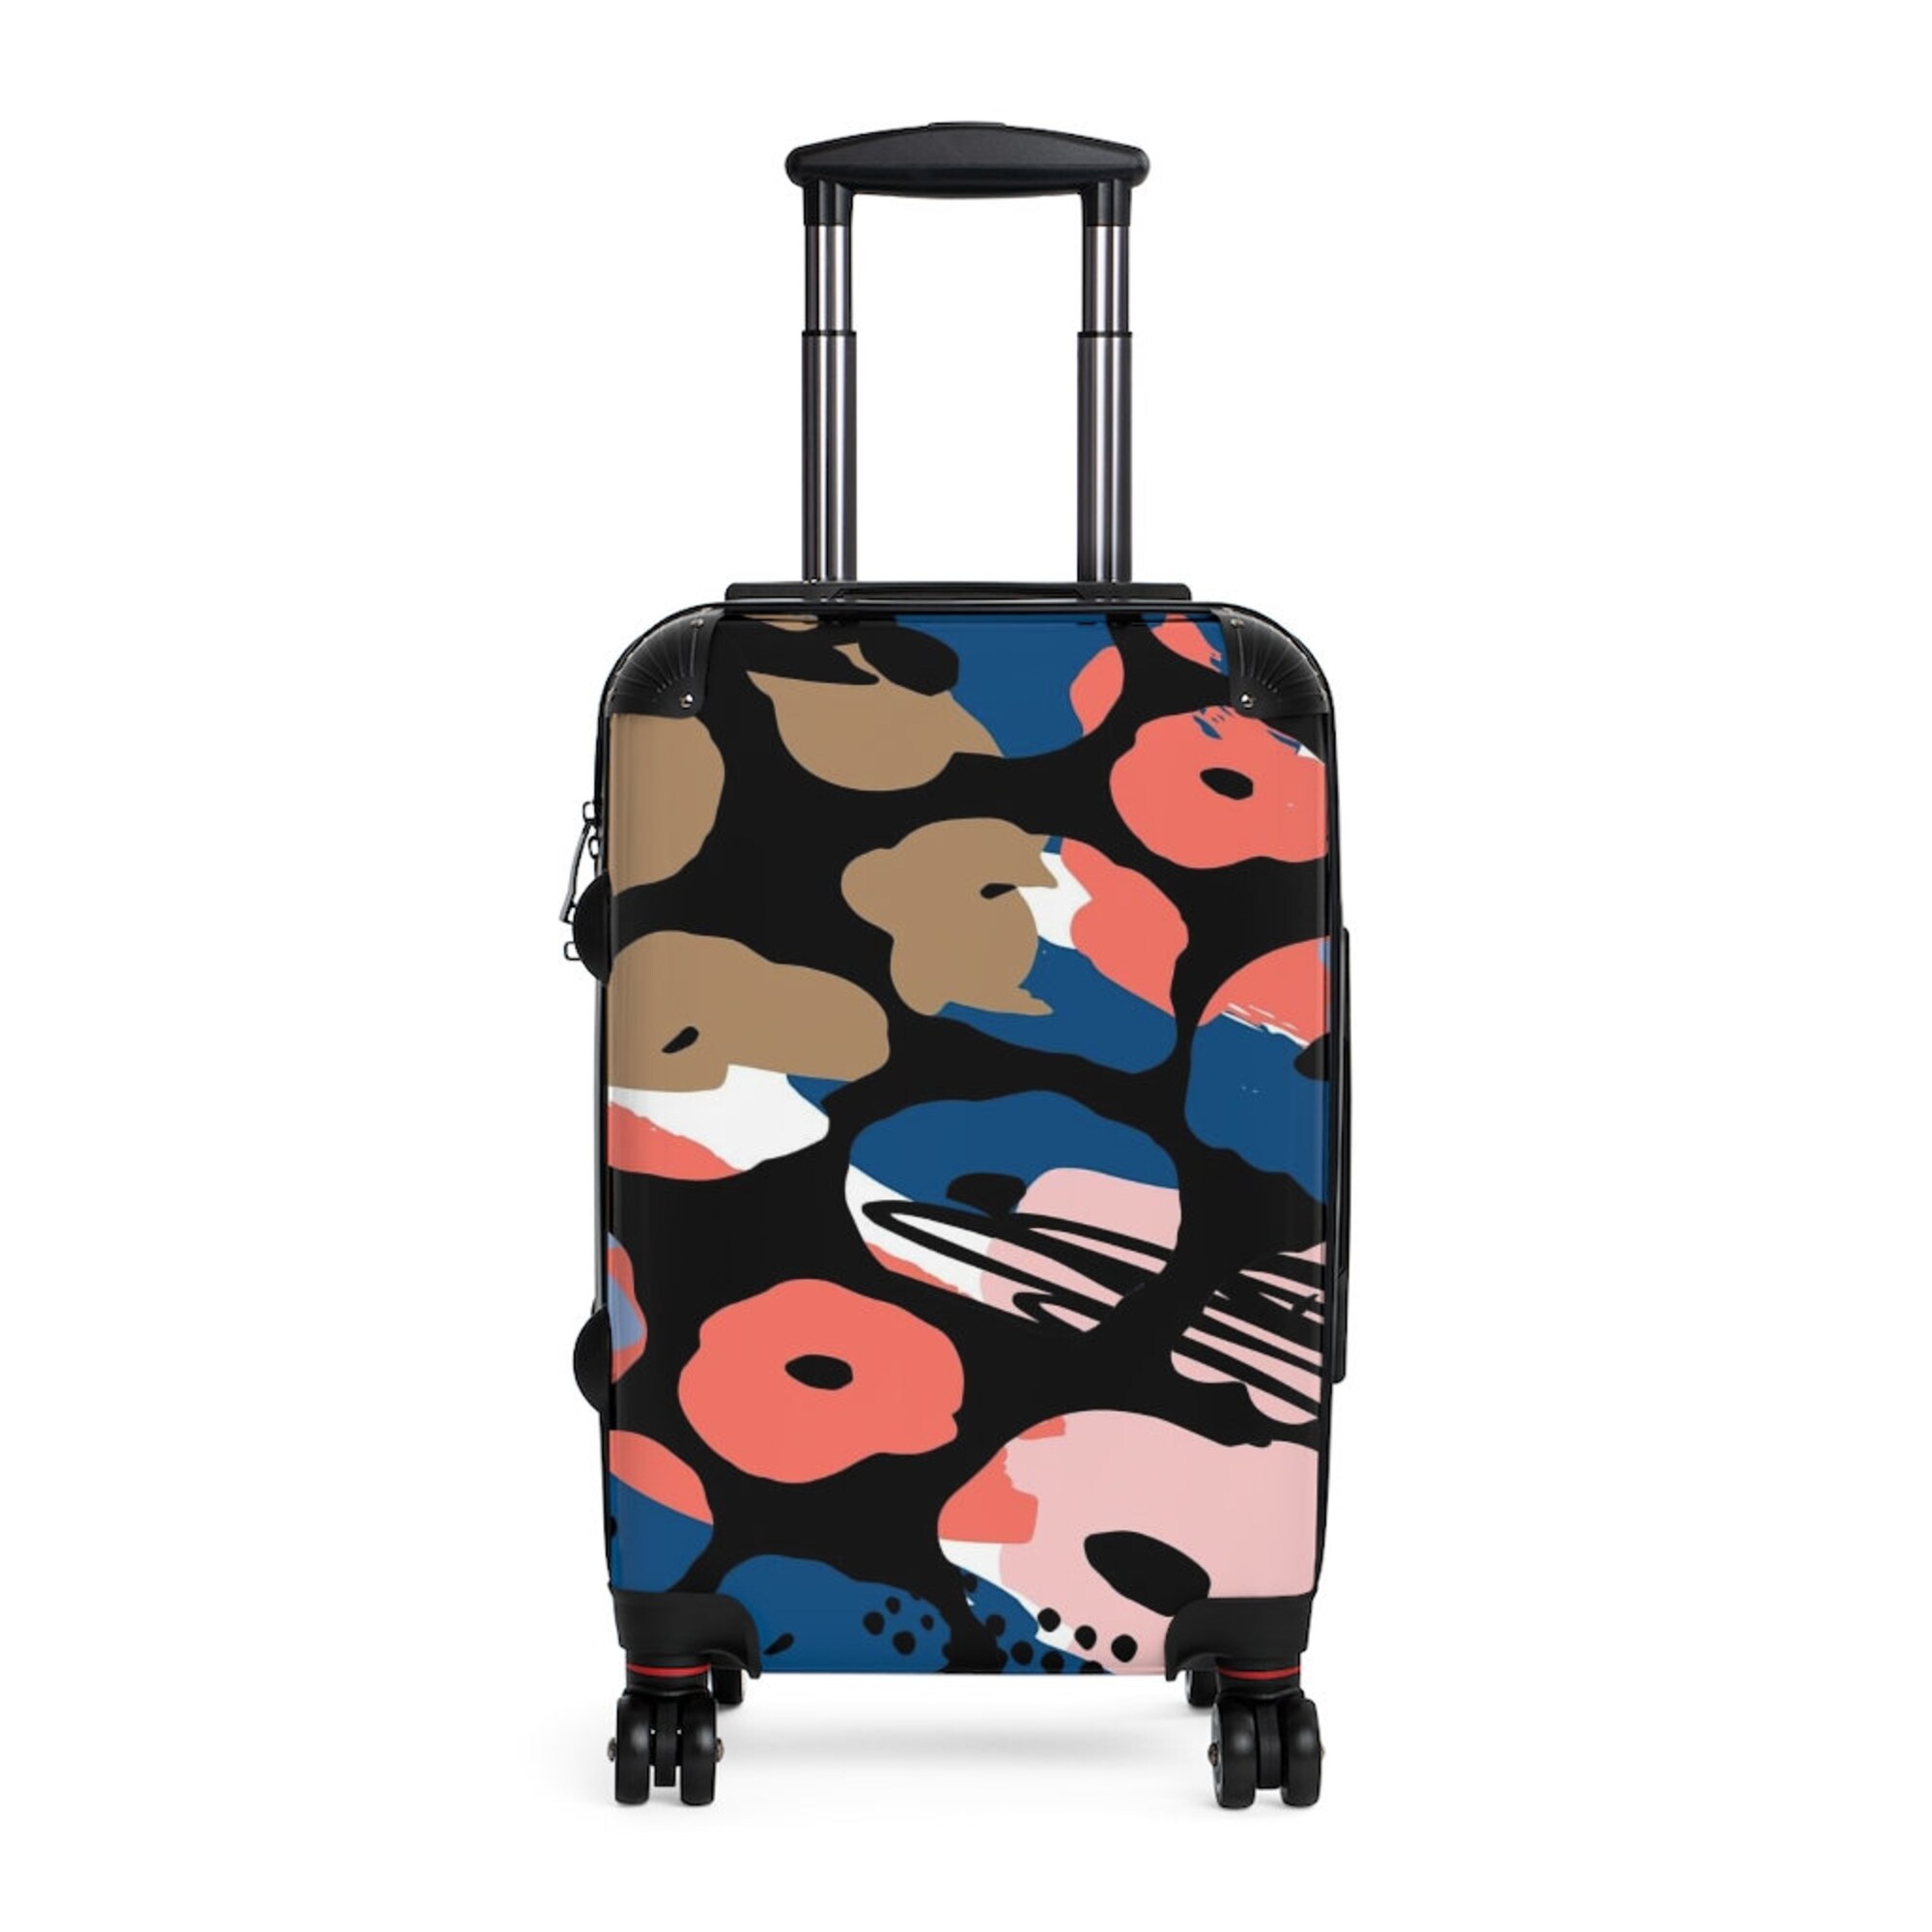 The Cora Suitcase